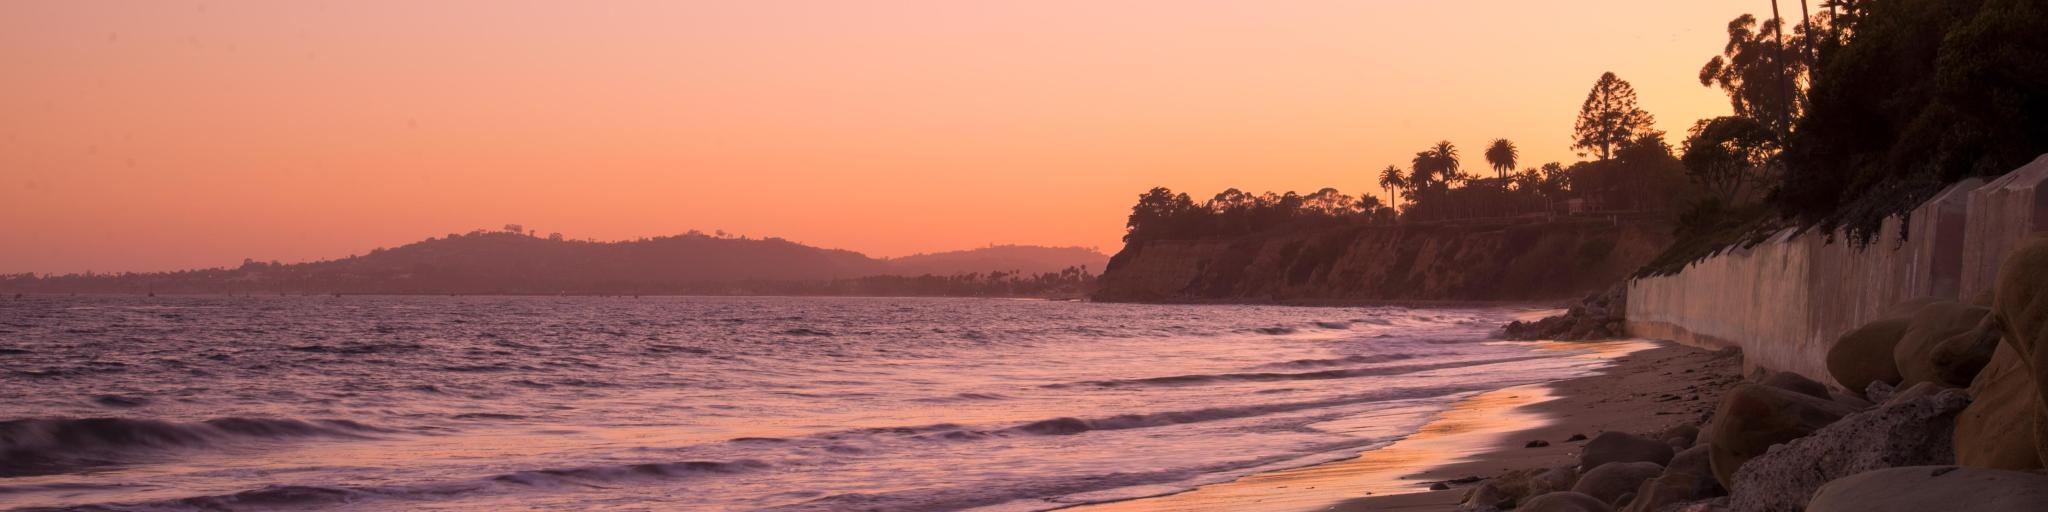 A pink sunset along the coast of Santa Barbara, California, USA.